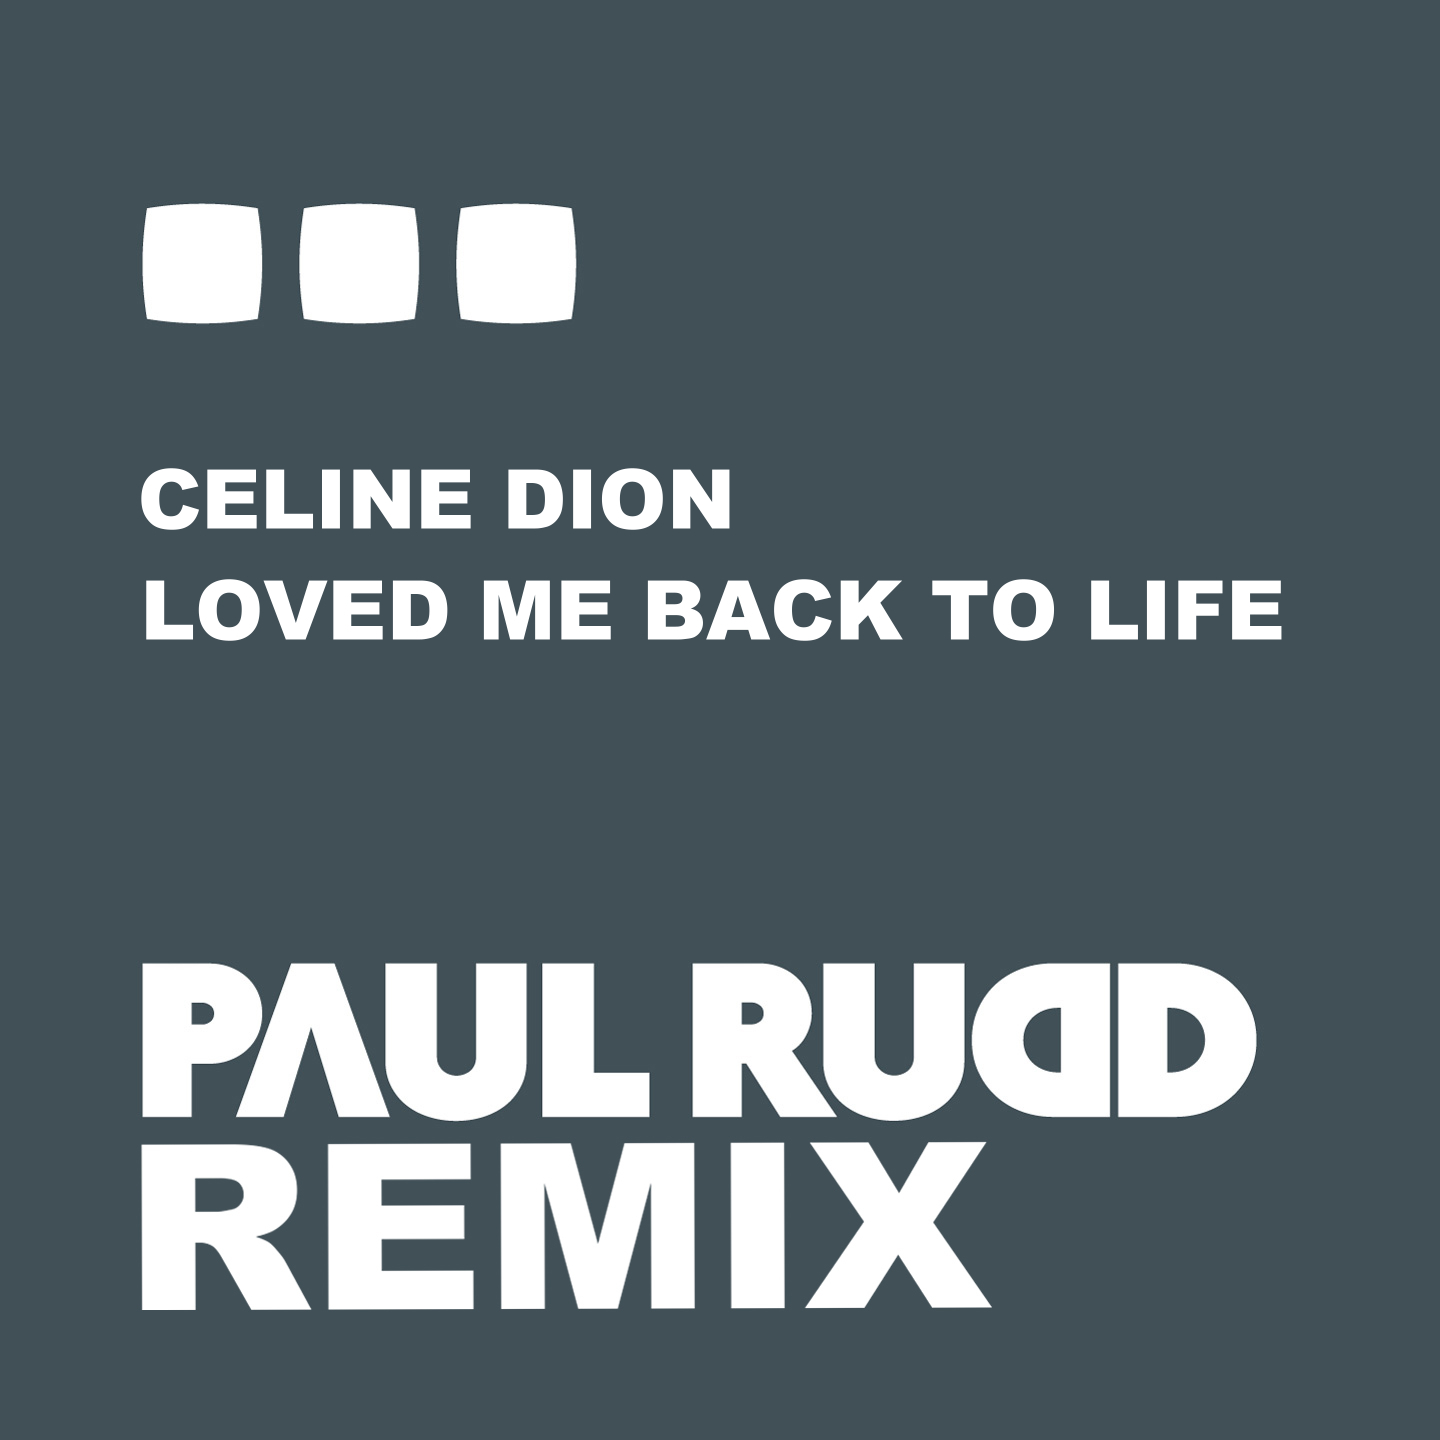 Back to life 3. Celine Dion Loved me back to Life. Paul is Life. Back to me. Love me back to Life Natalie перевод.